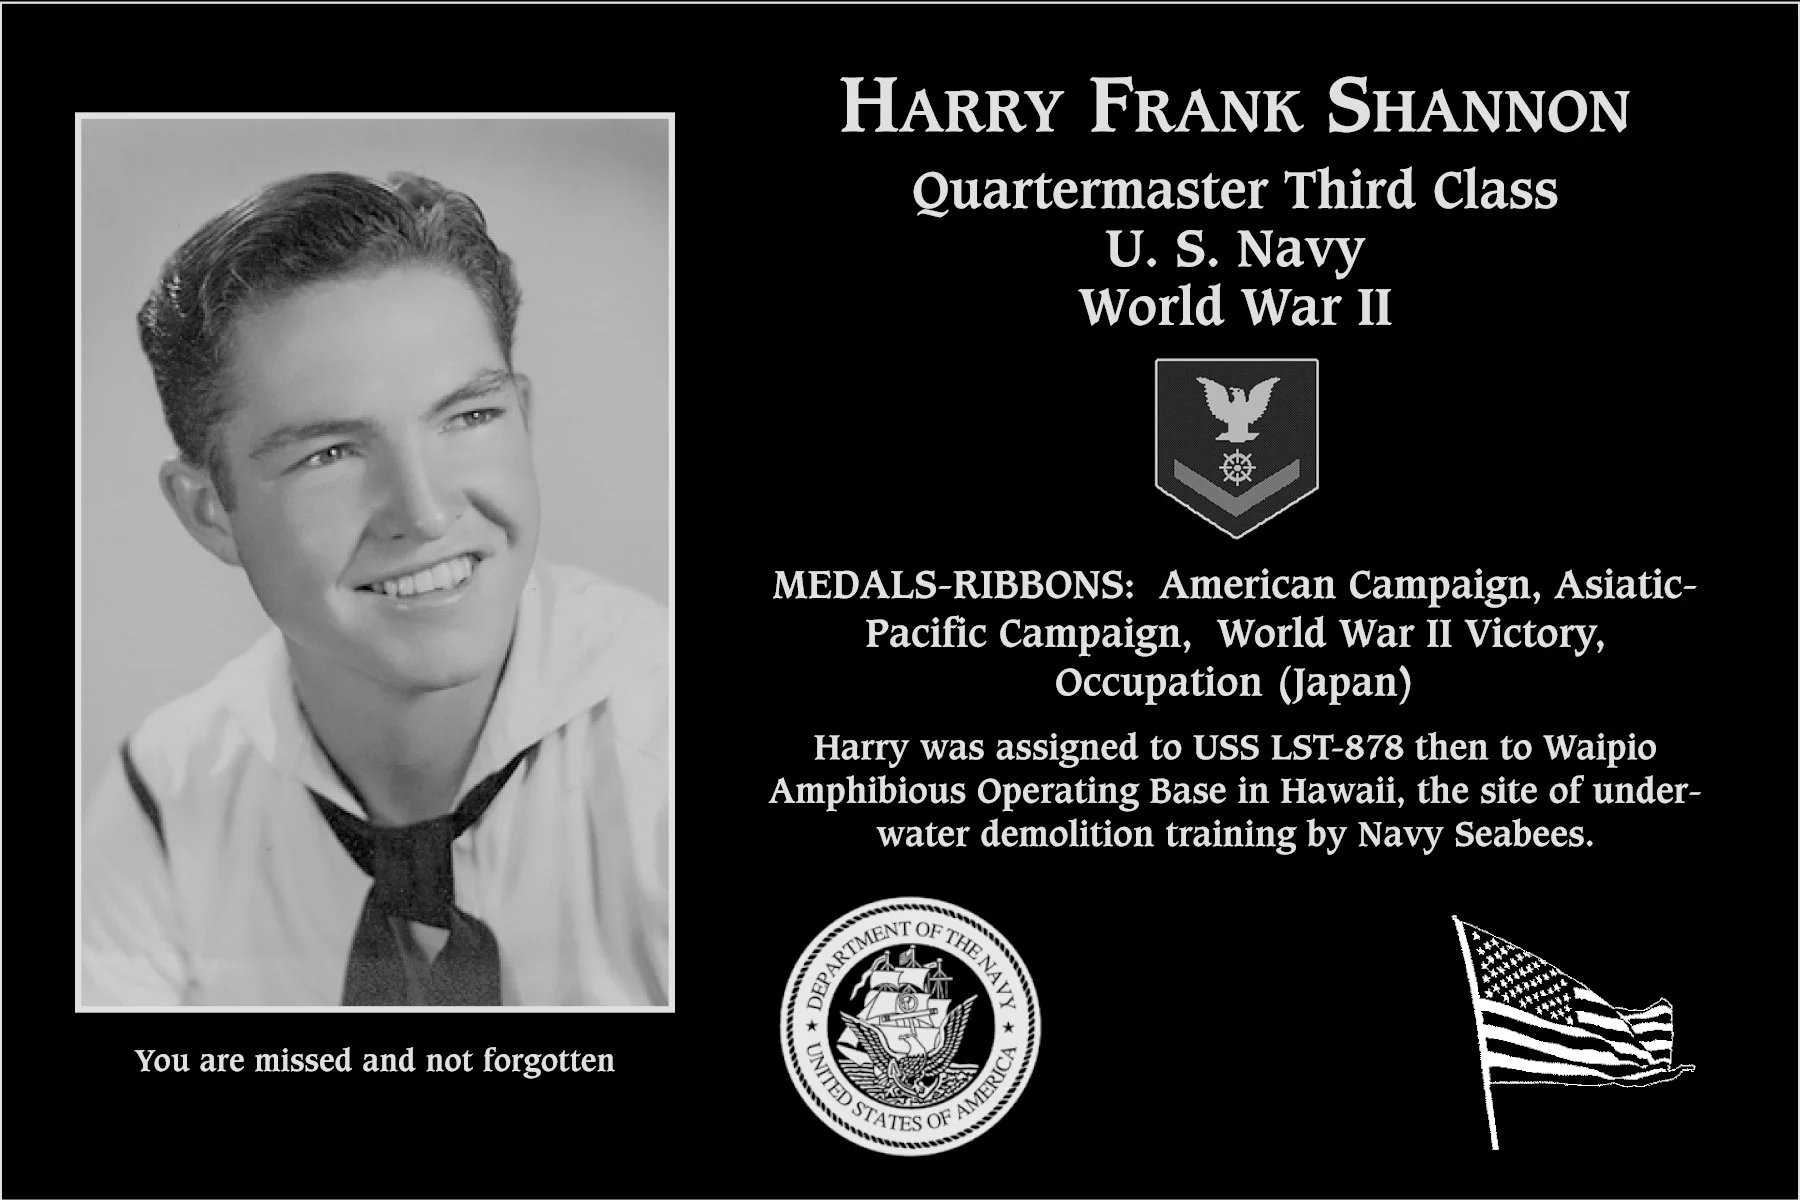 Harry Frank Shannon